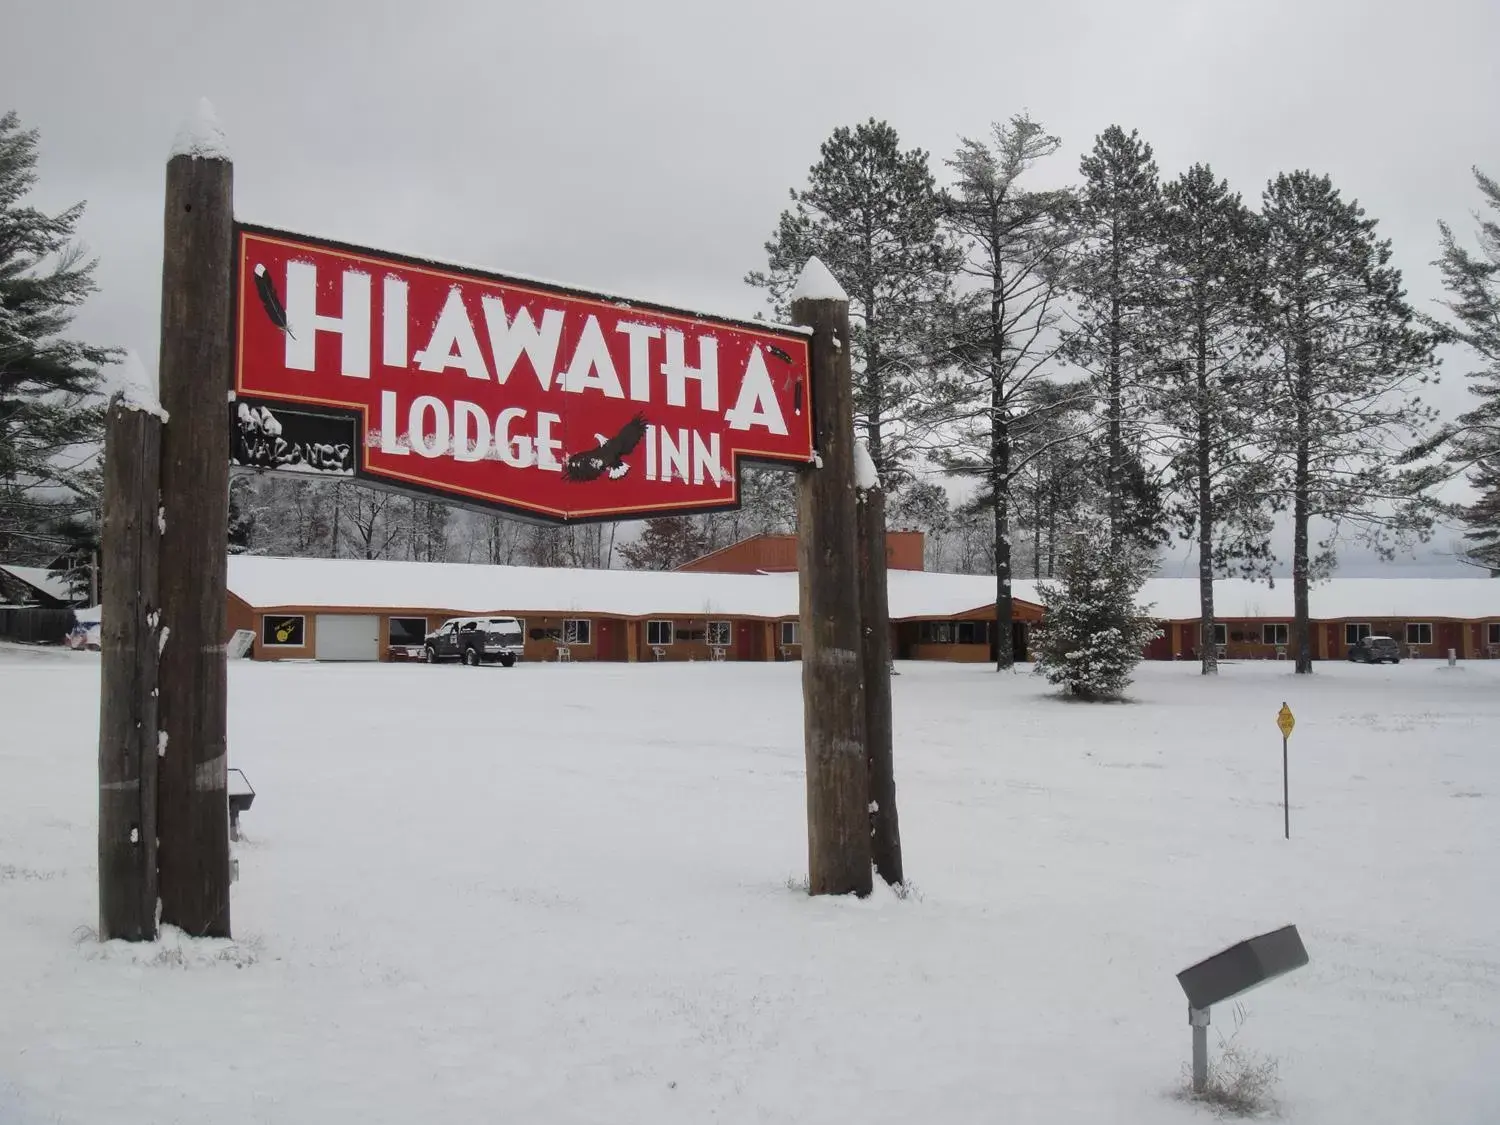 Winter in Hiawatha Lodge Inn